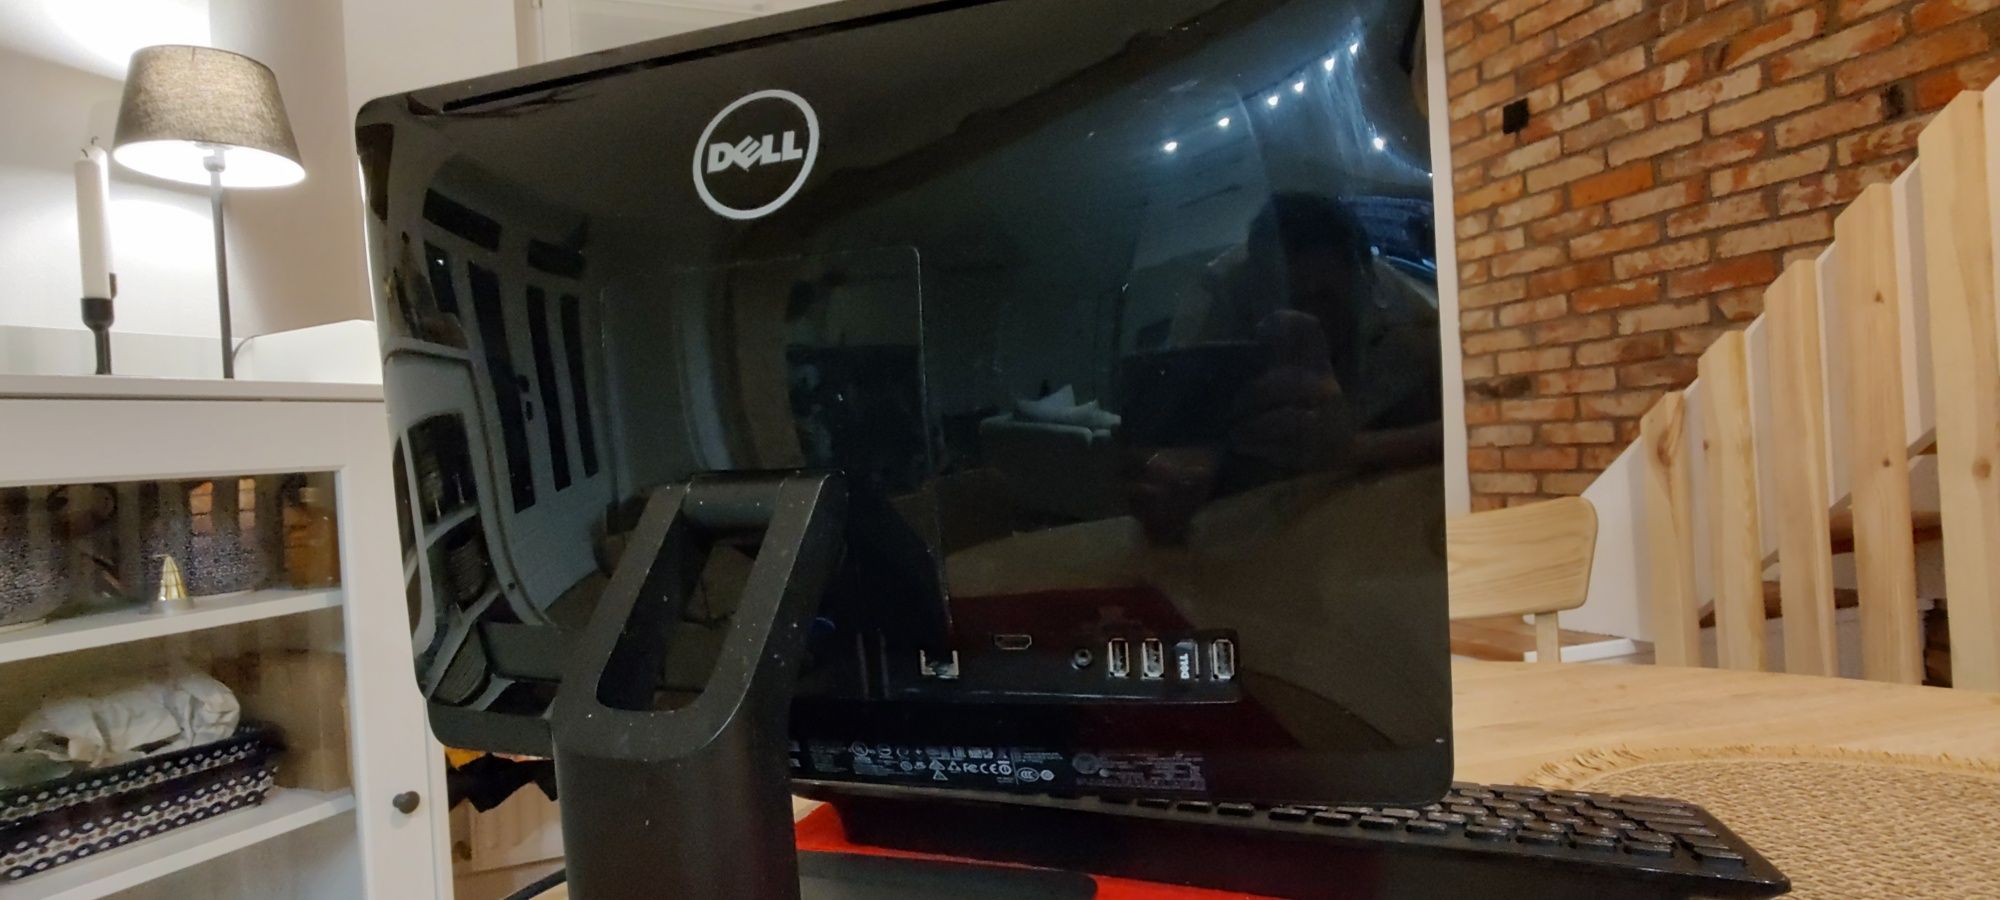 Komputer Dell Inspiron 20 model 3048 AiO